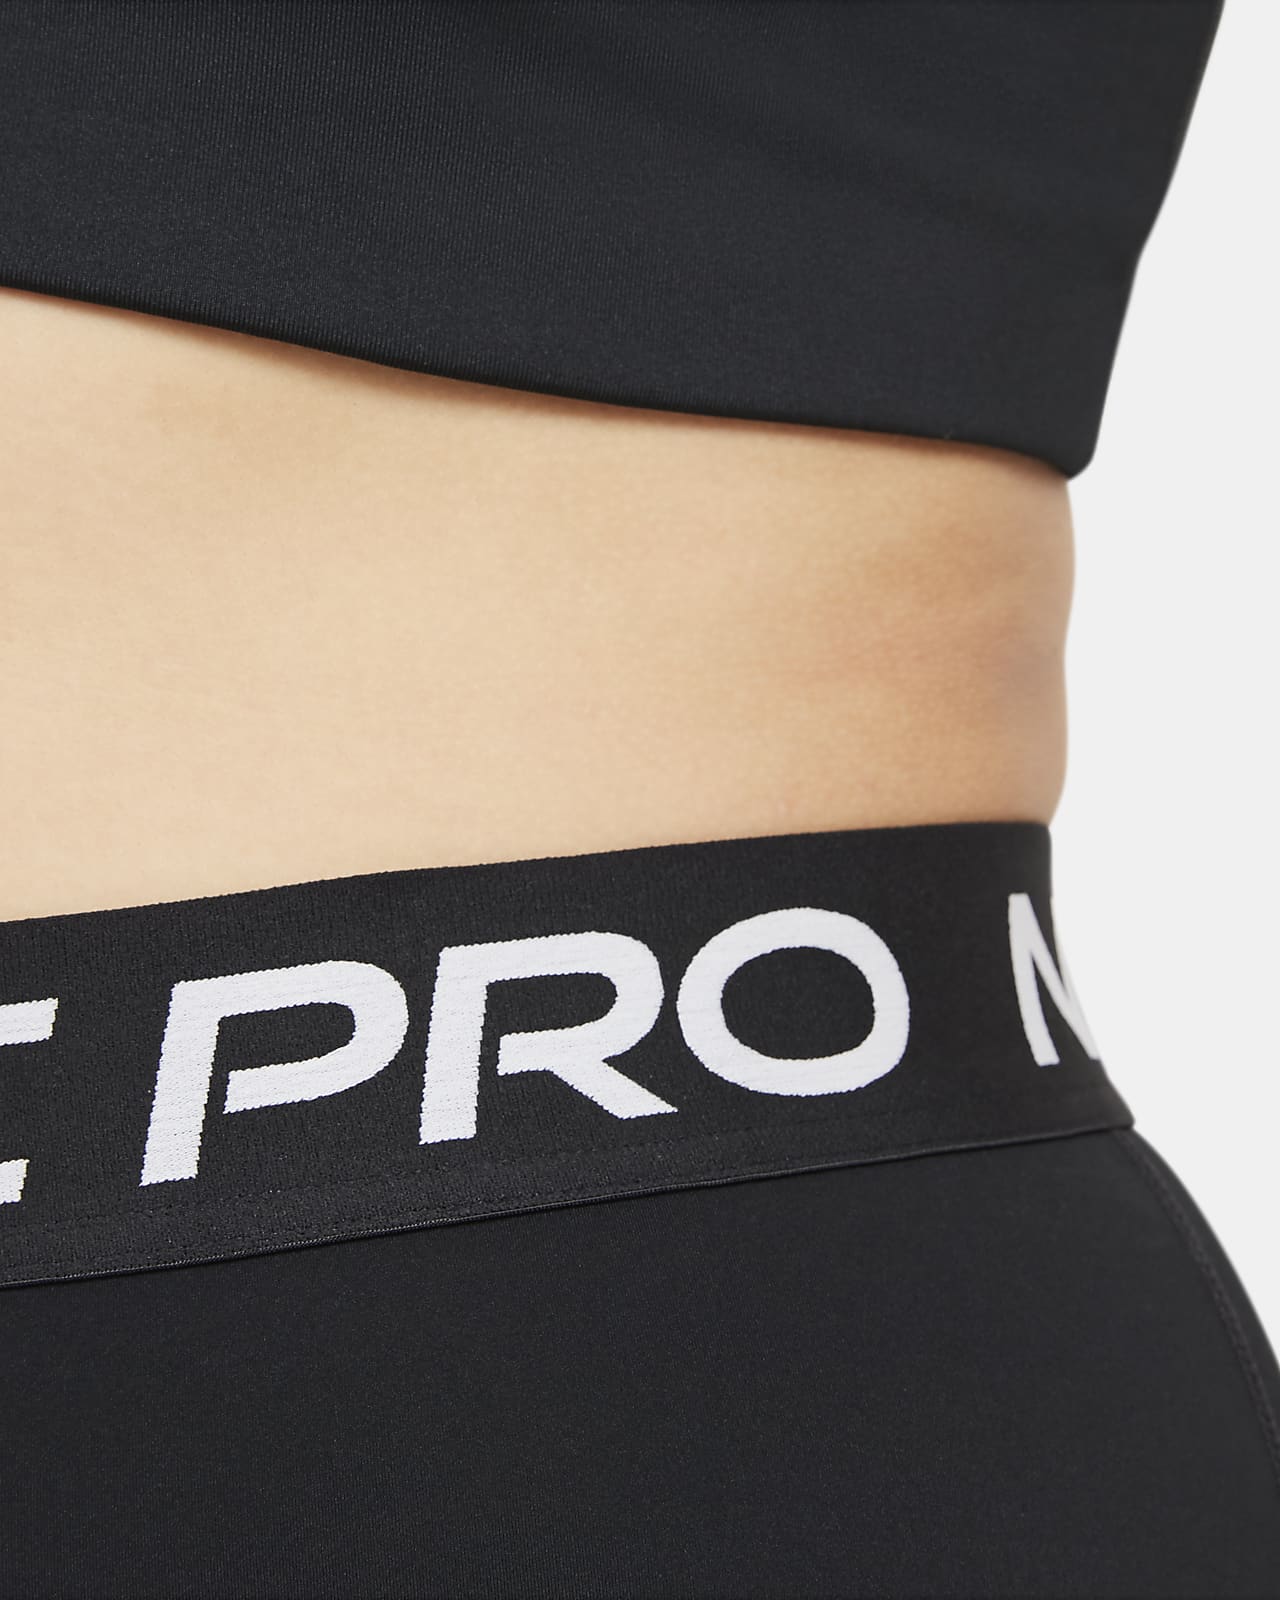 Buy Nike women plus size midrise crop leggings black Online